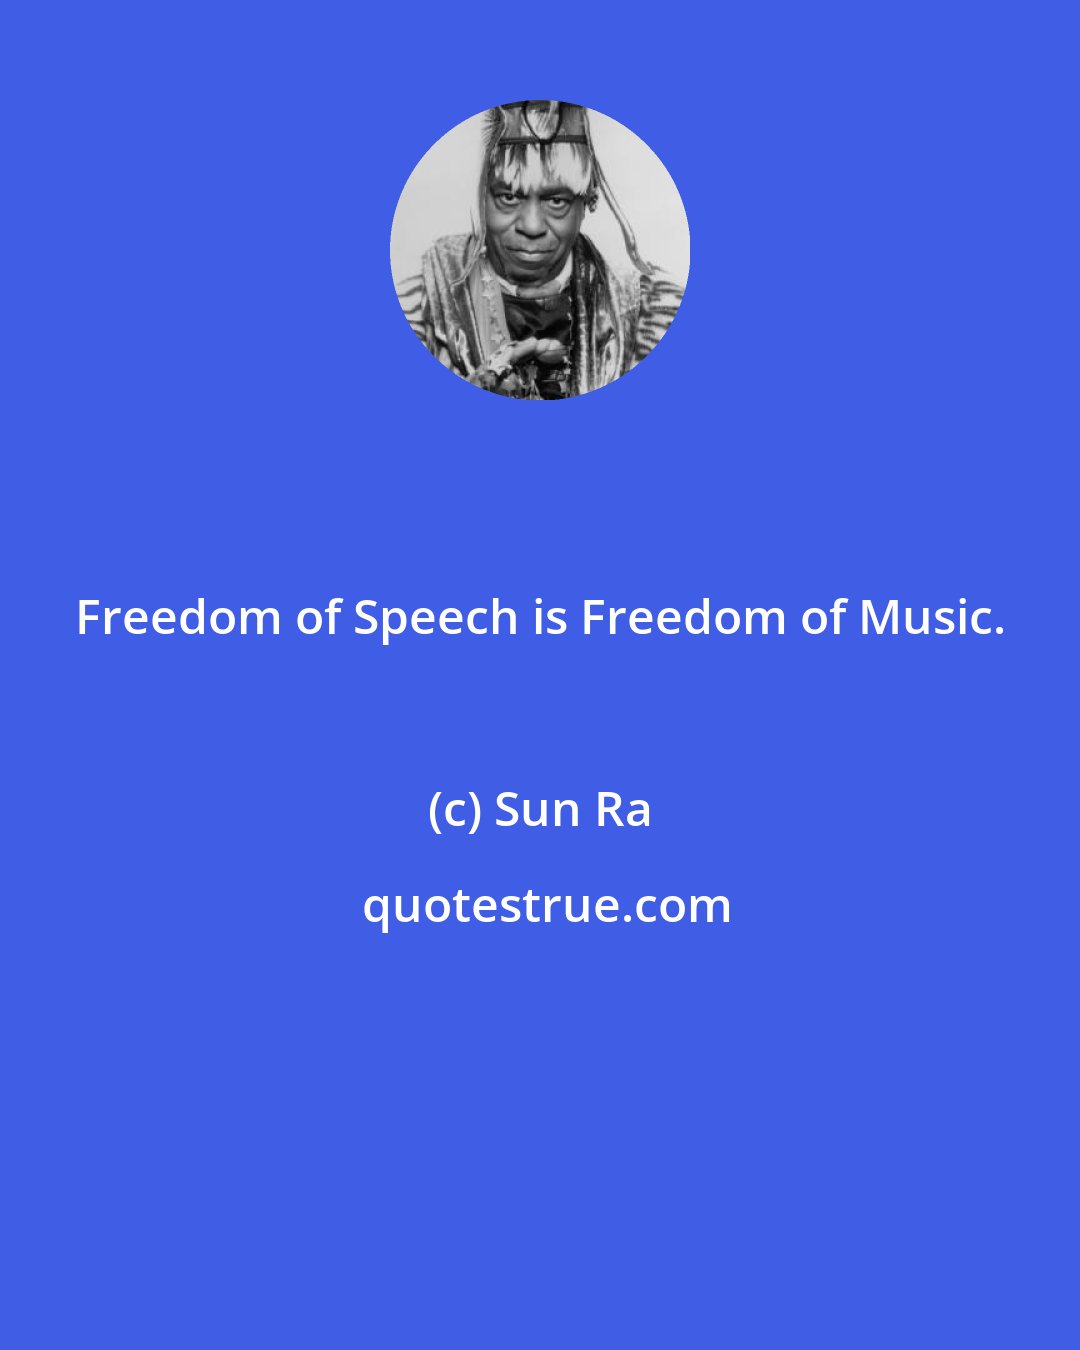 Sun Ra: Freedom of Speech is Freedom of Music.